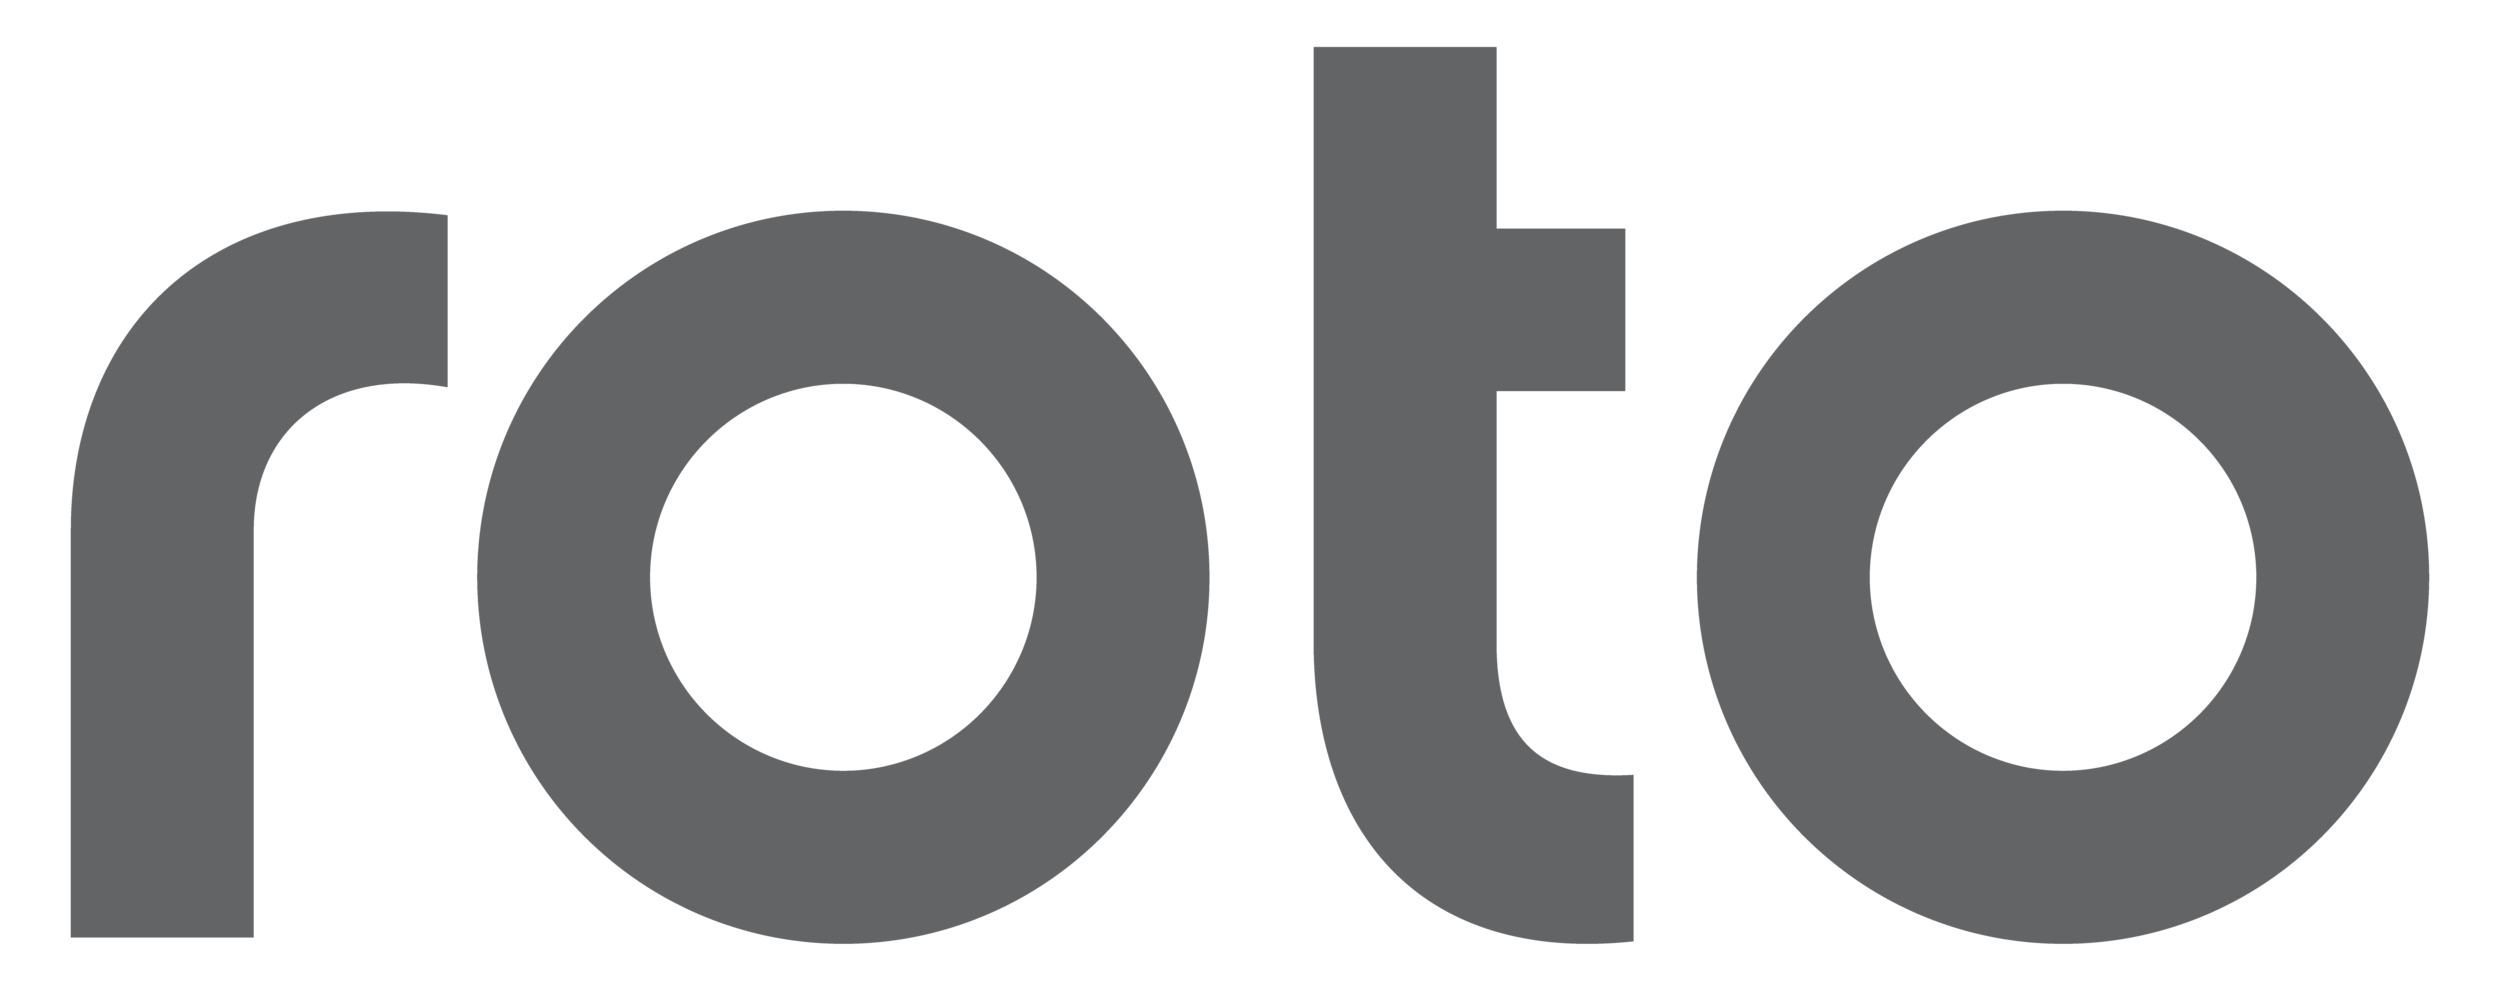 Copy of Roto